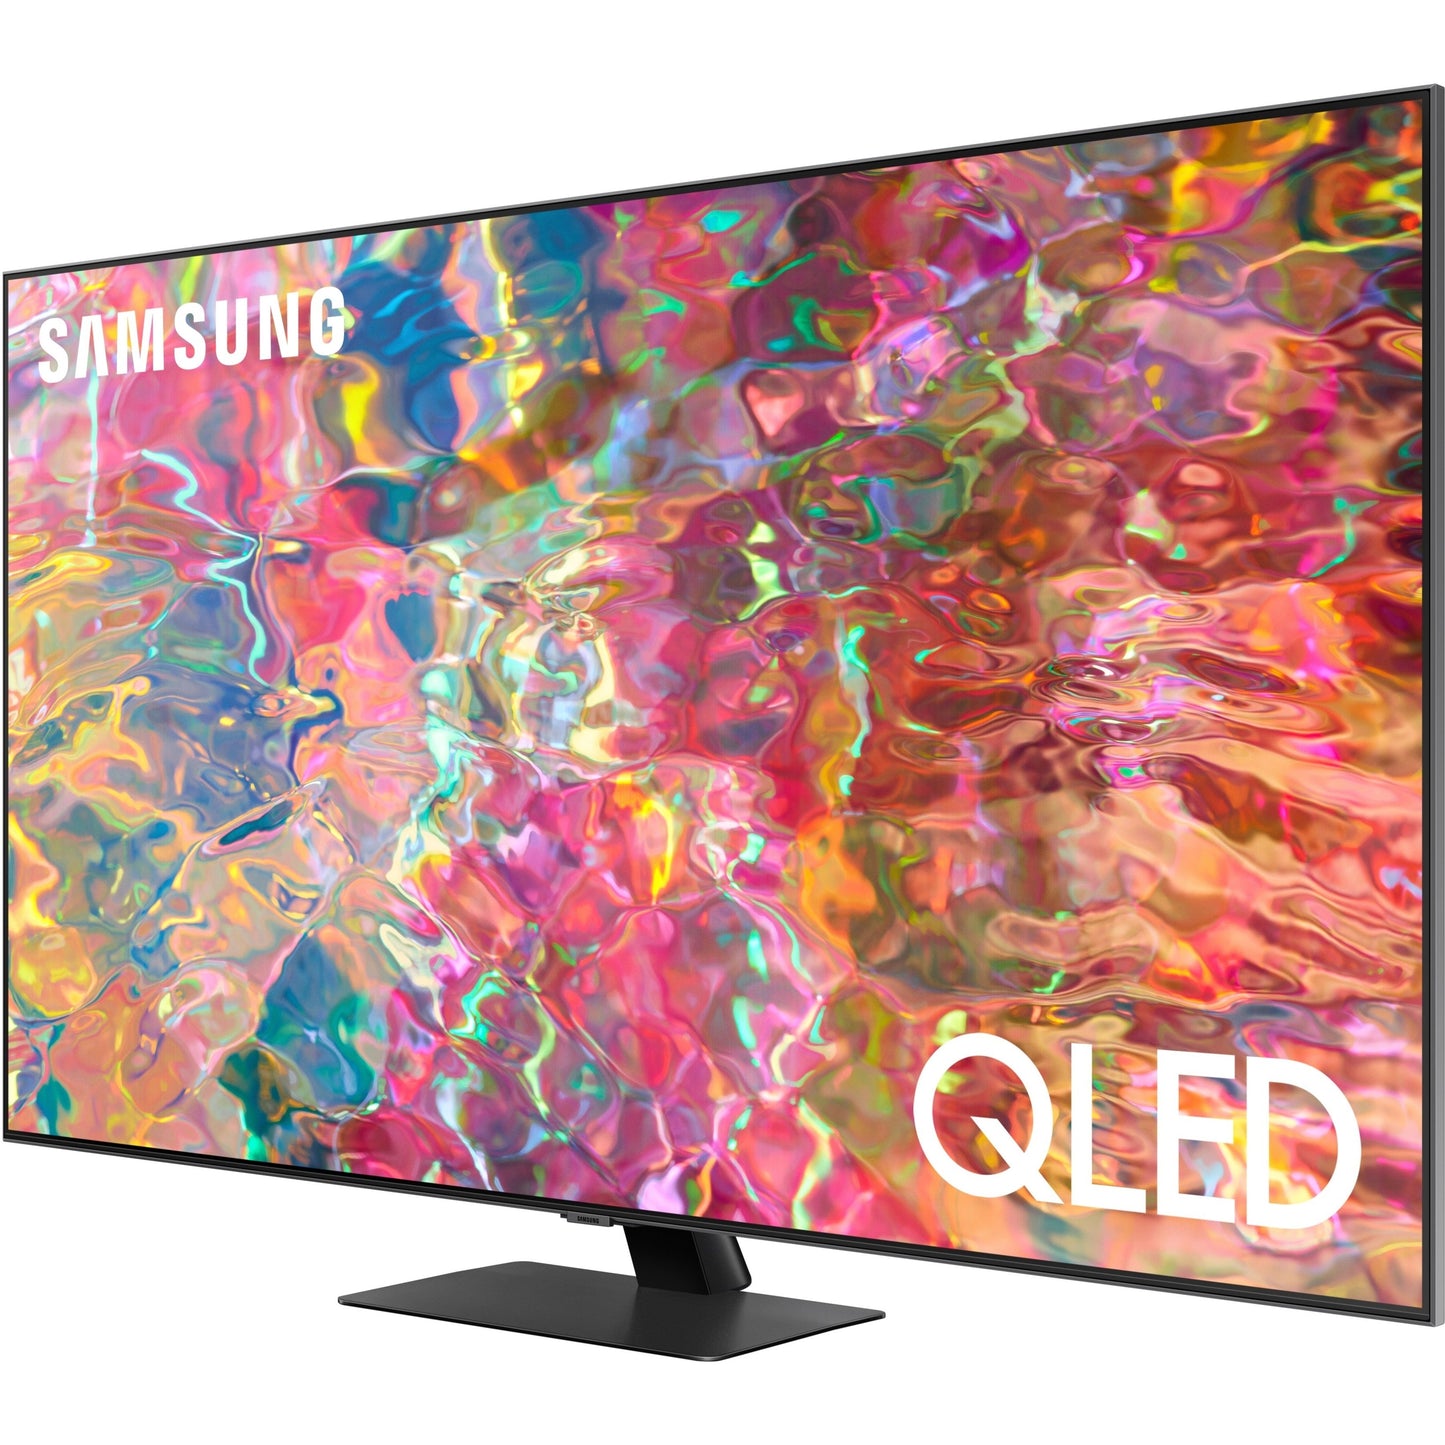 Samsung Q80B QN65Q80BAF 64.5" Smart LED-LCD TV - 4K UHDTV - Titan Black Sand Black